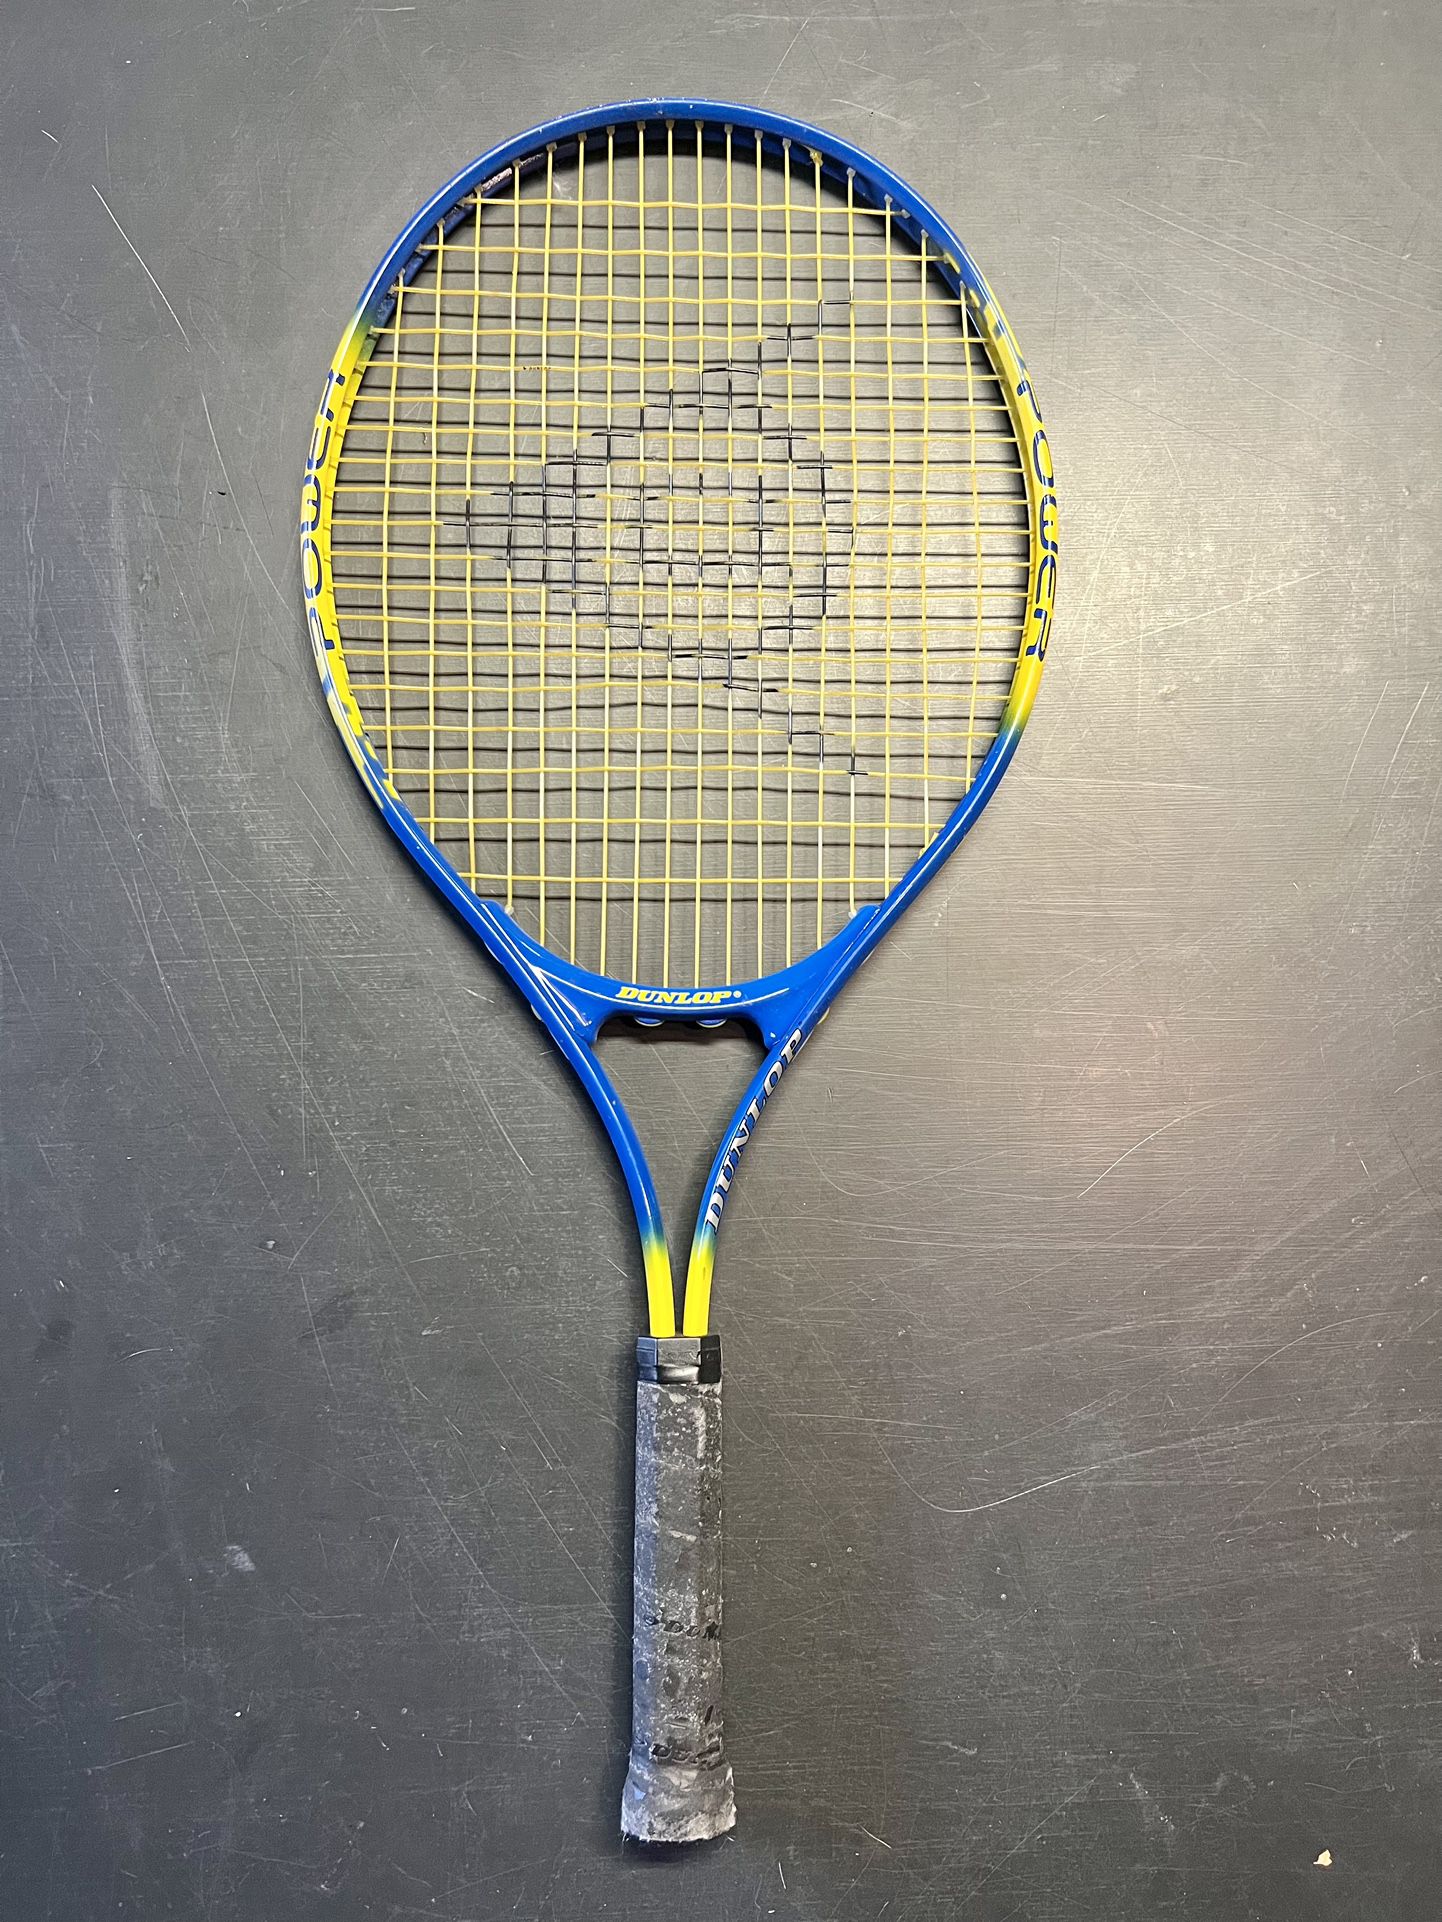 1 Tennis racket